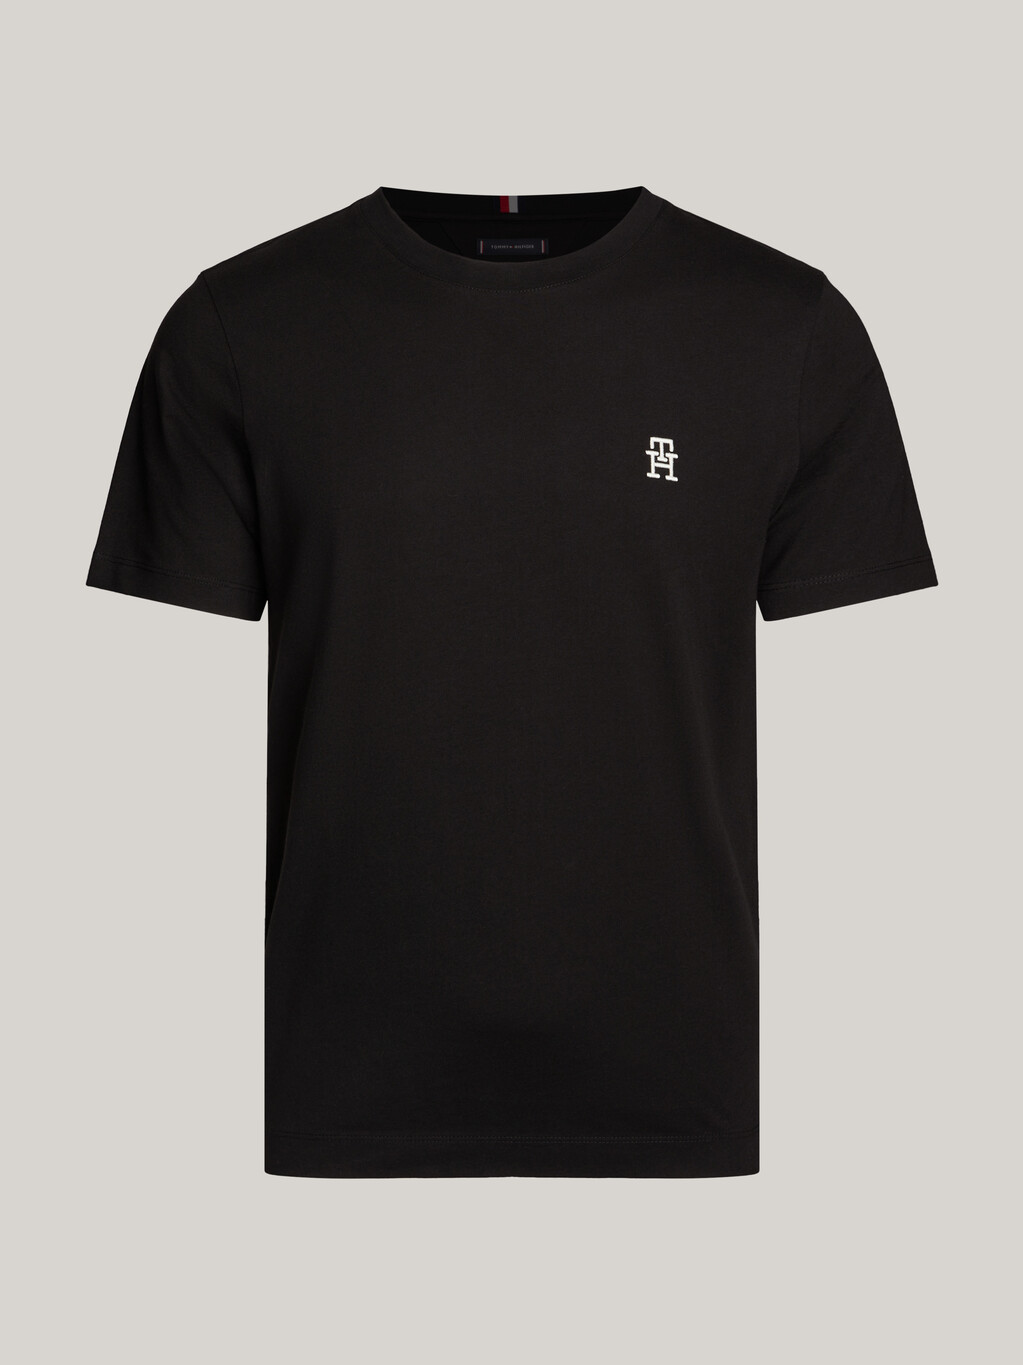 TH Monogram T-Shirt, Black, hi-res